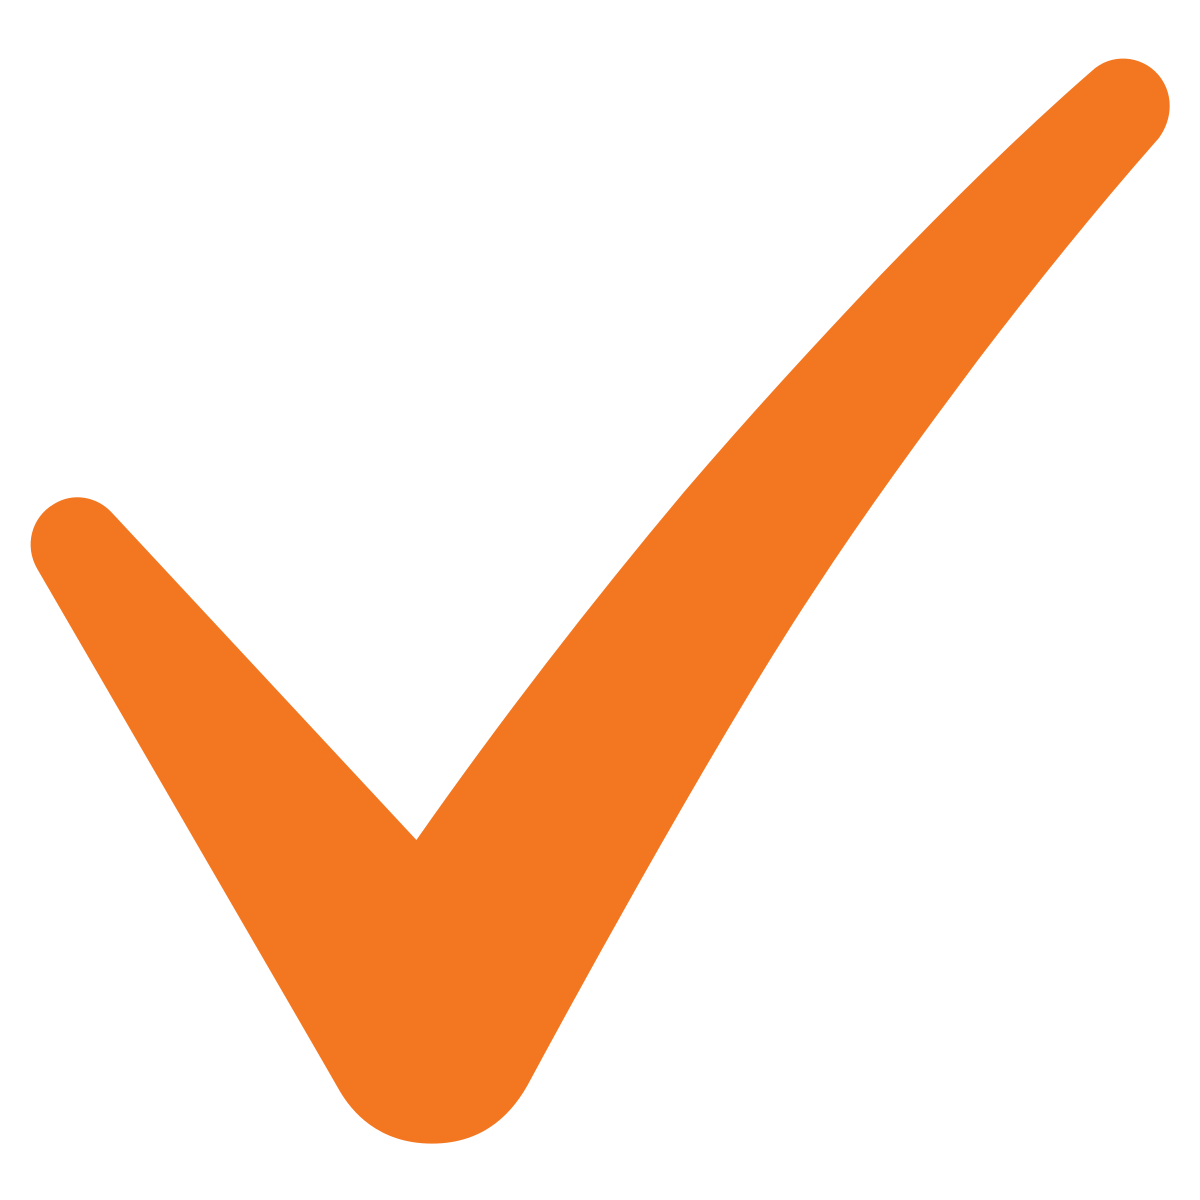 orange check mark